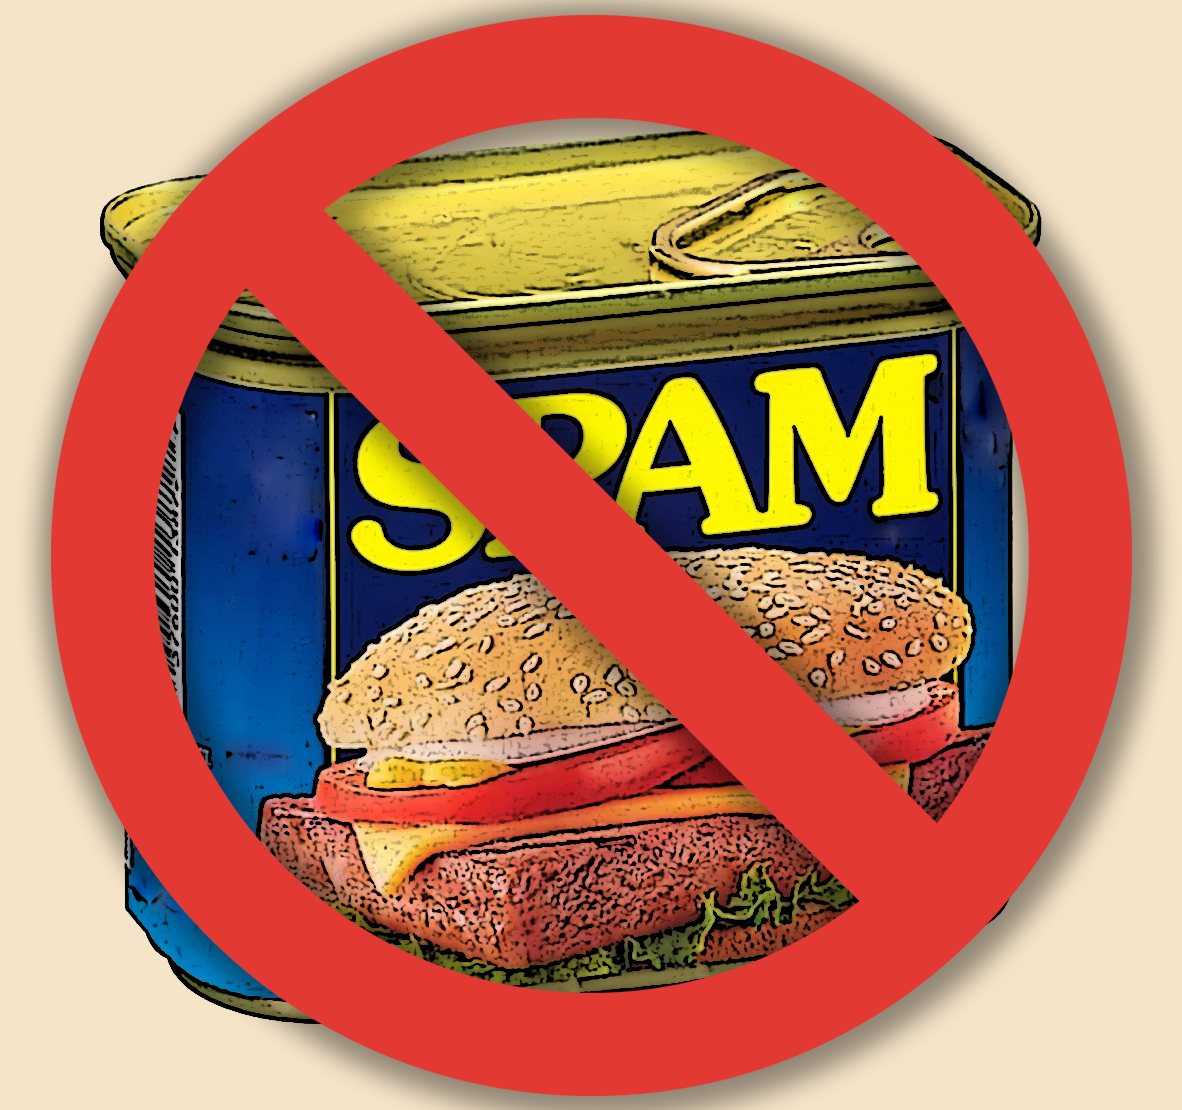 spam trap image